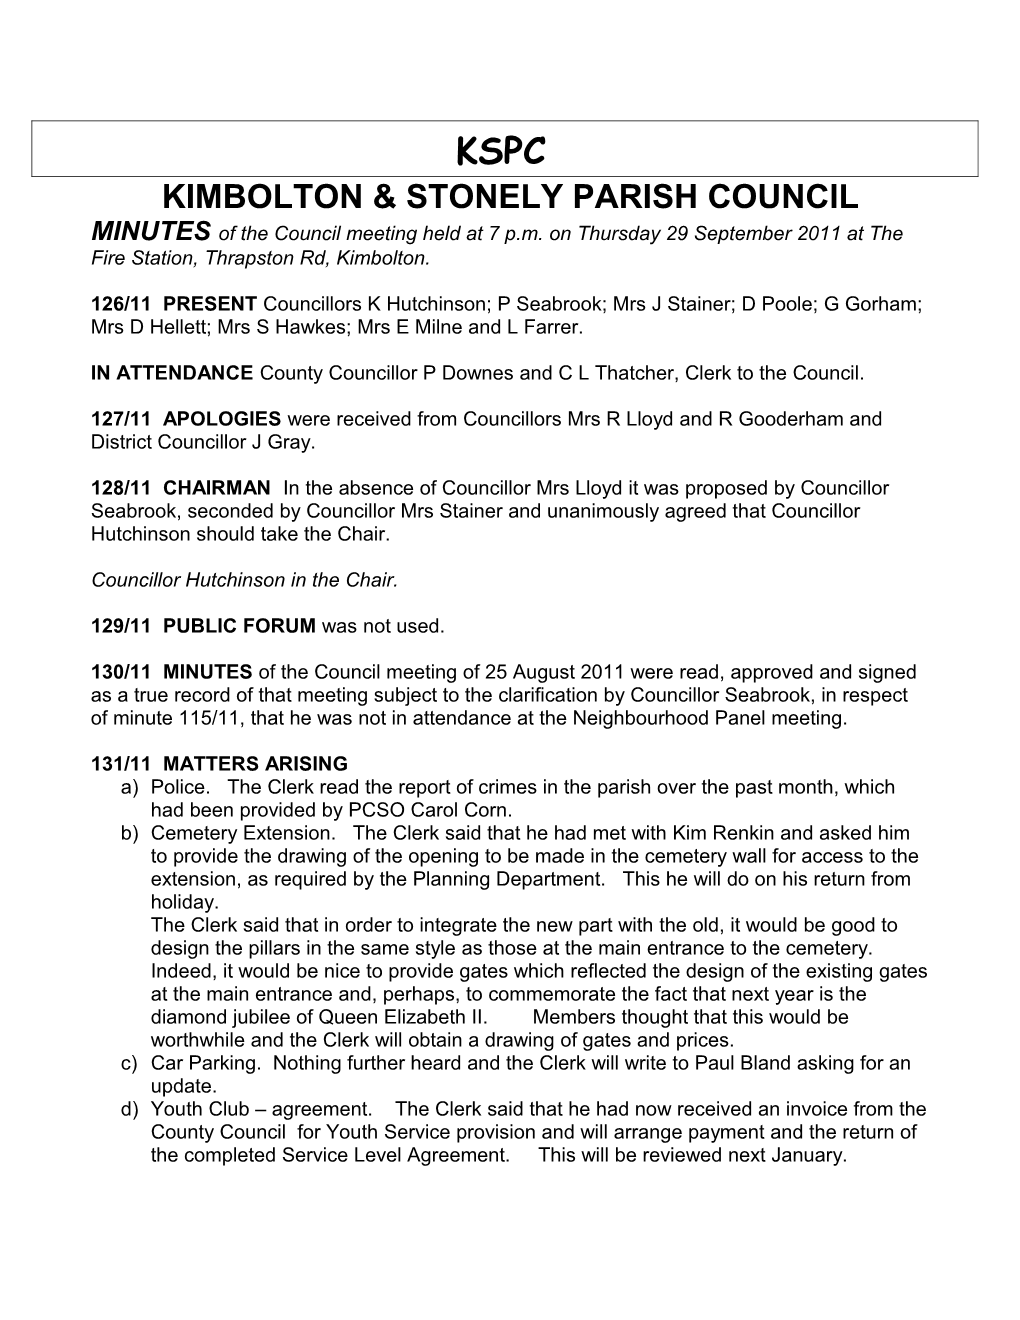 Kimbolton & Stonely Parish Council s6